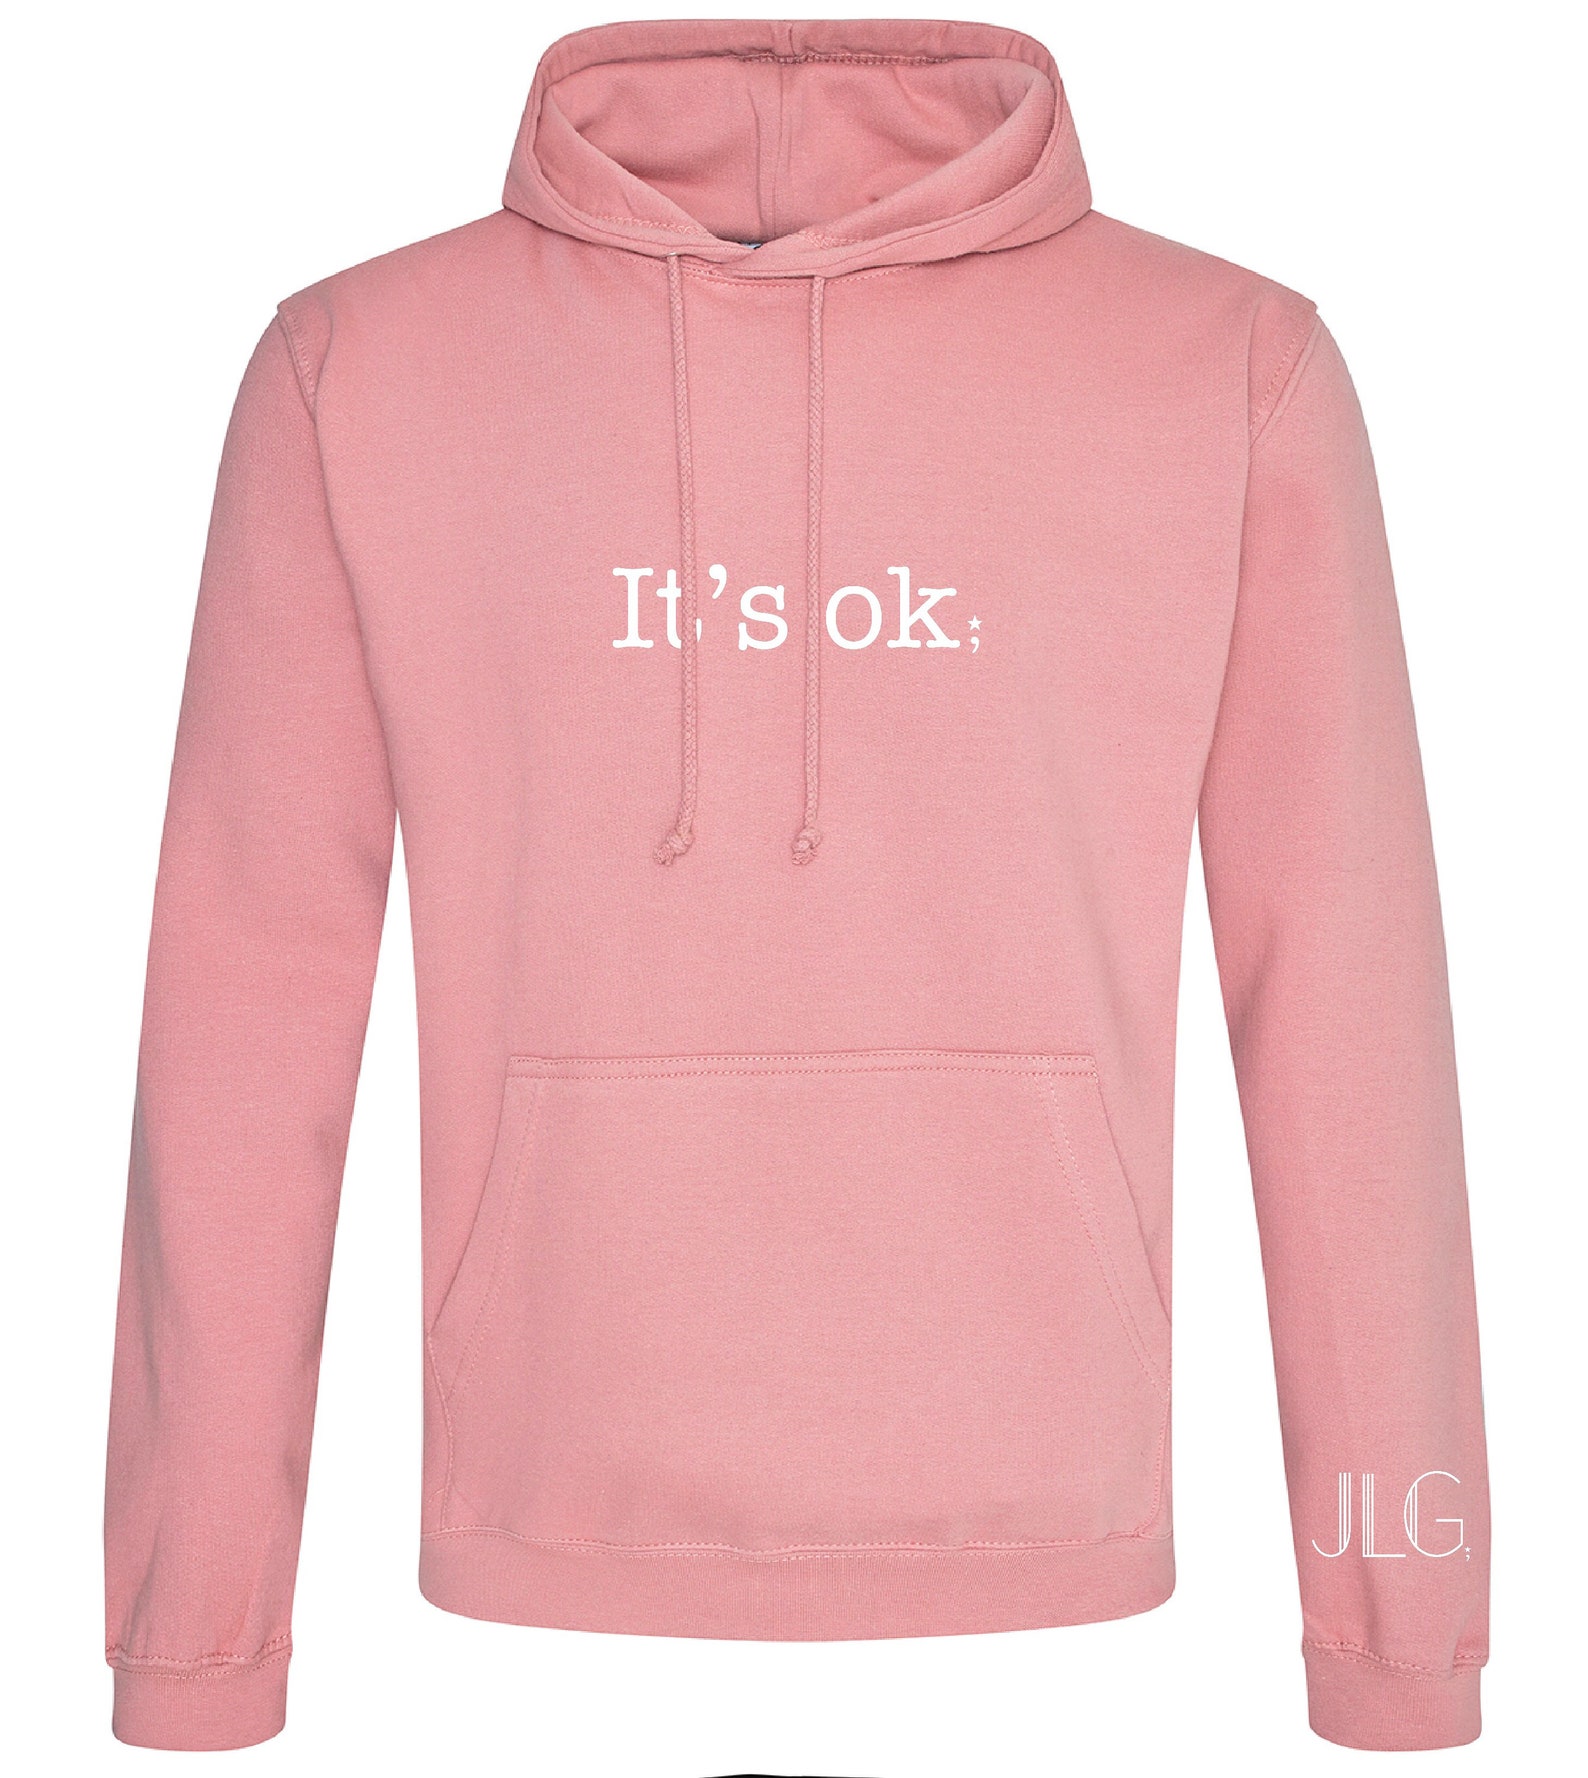 Its ok hoodie // semi colon // unisex // mental health | Etsy